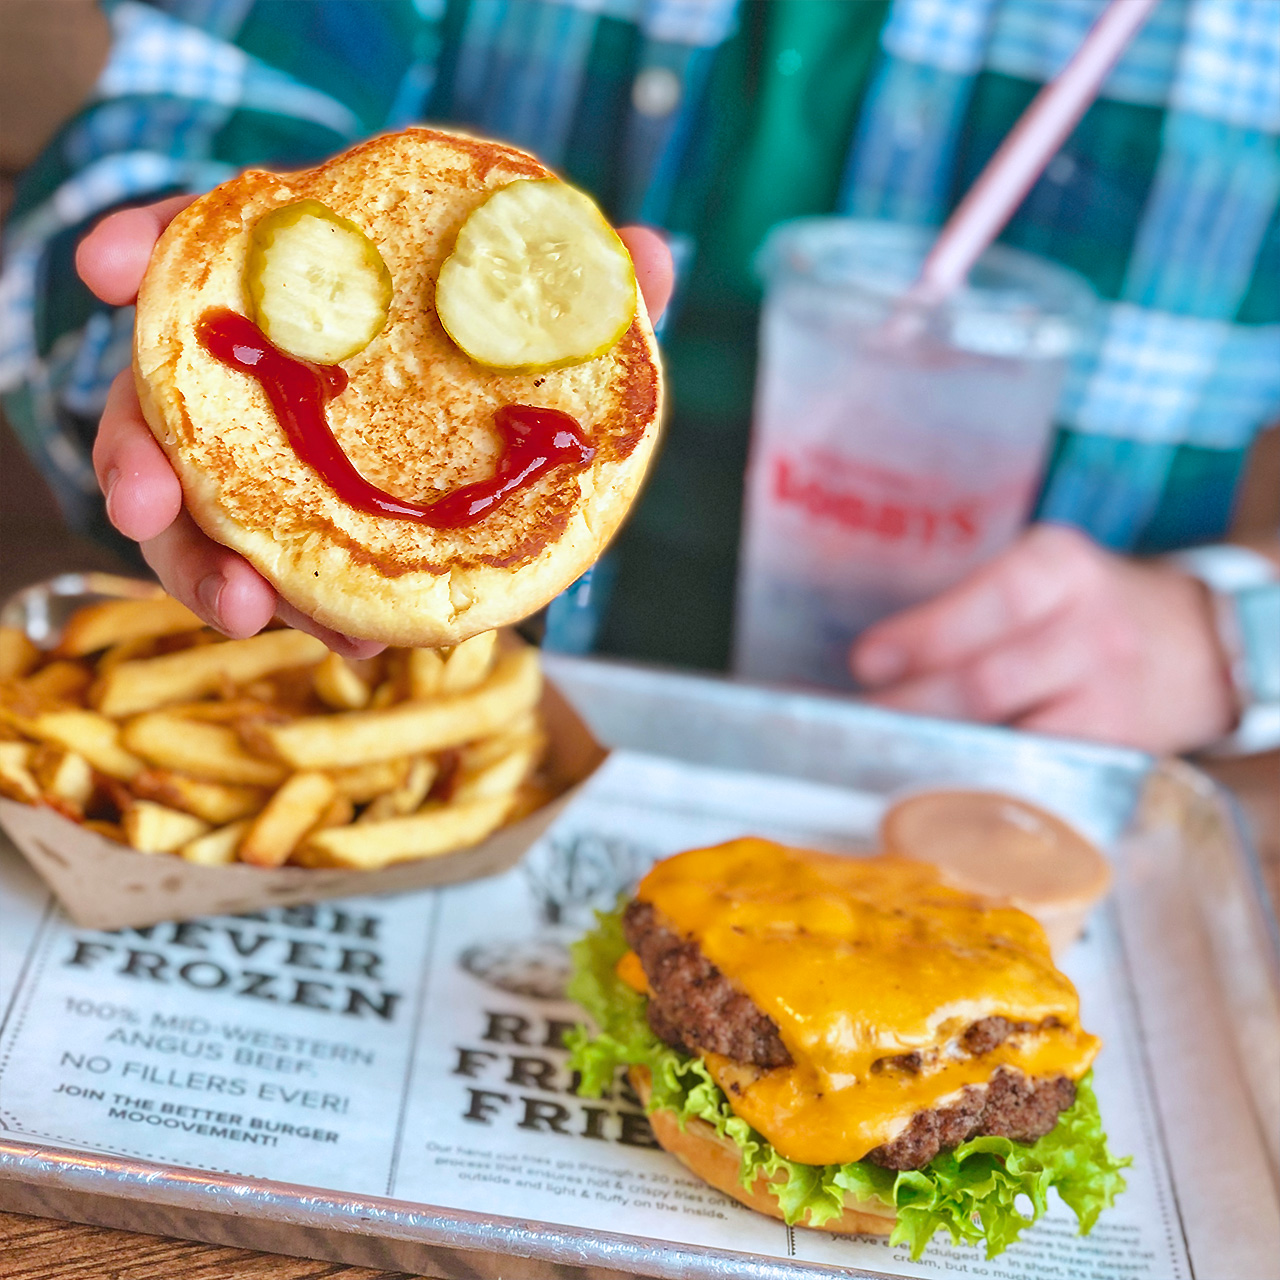 Burger and bun with smiley face